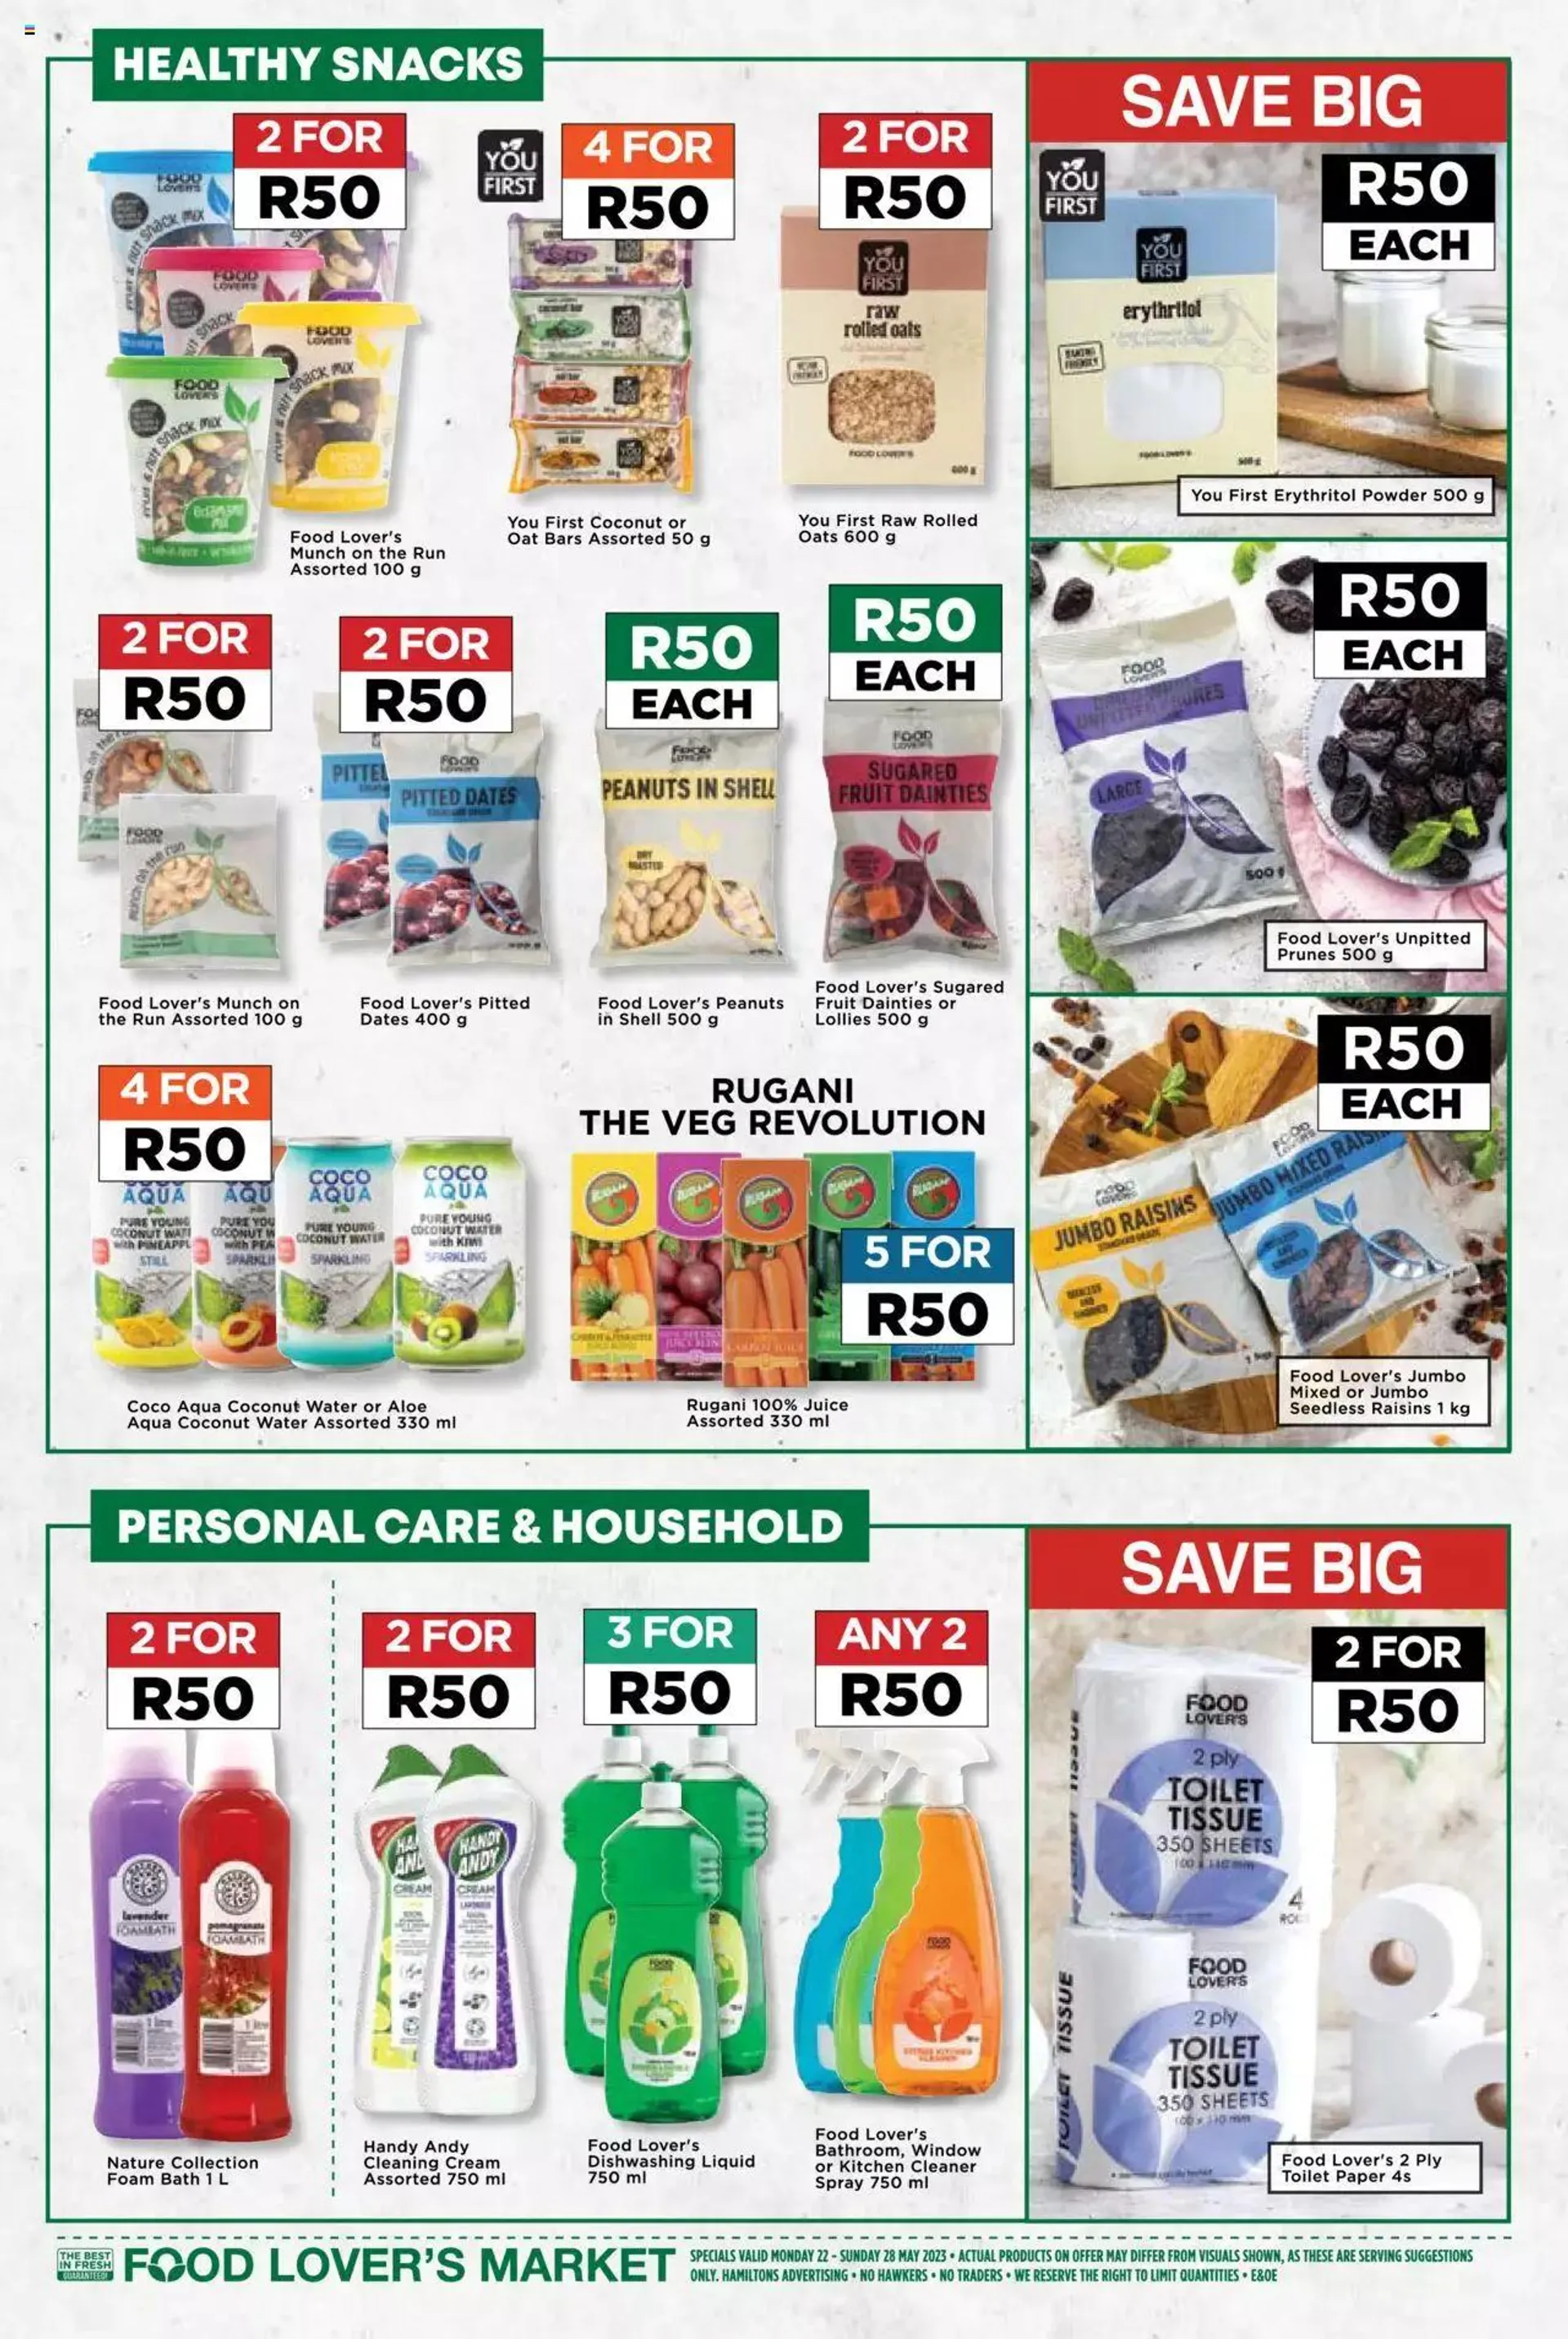 Food Lovers Market KwaZulu-Natal - Weekly Specials - 10